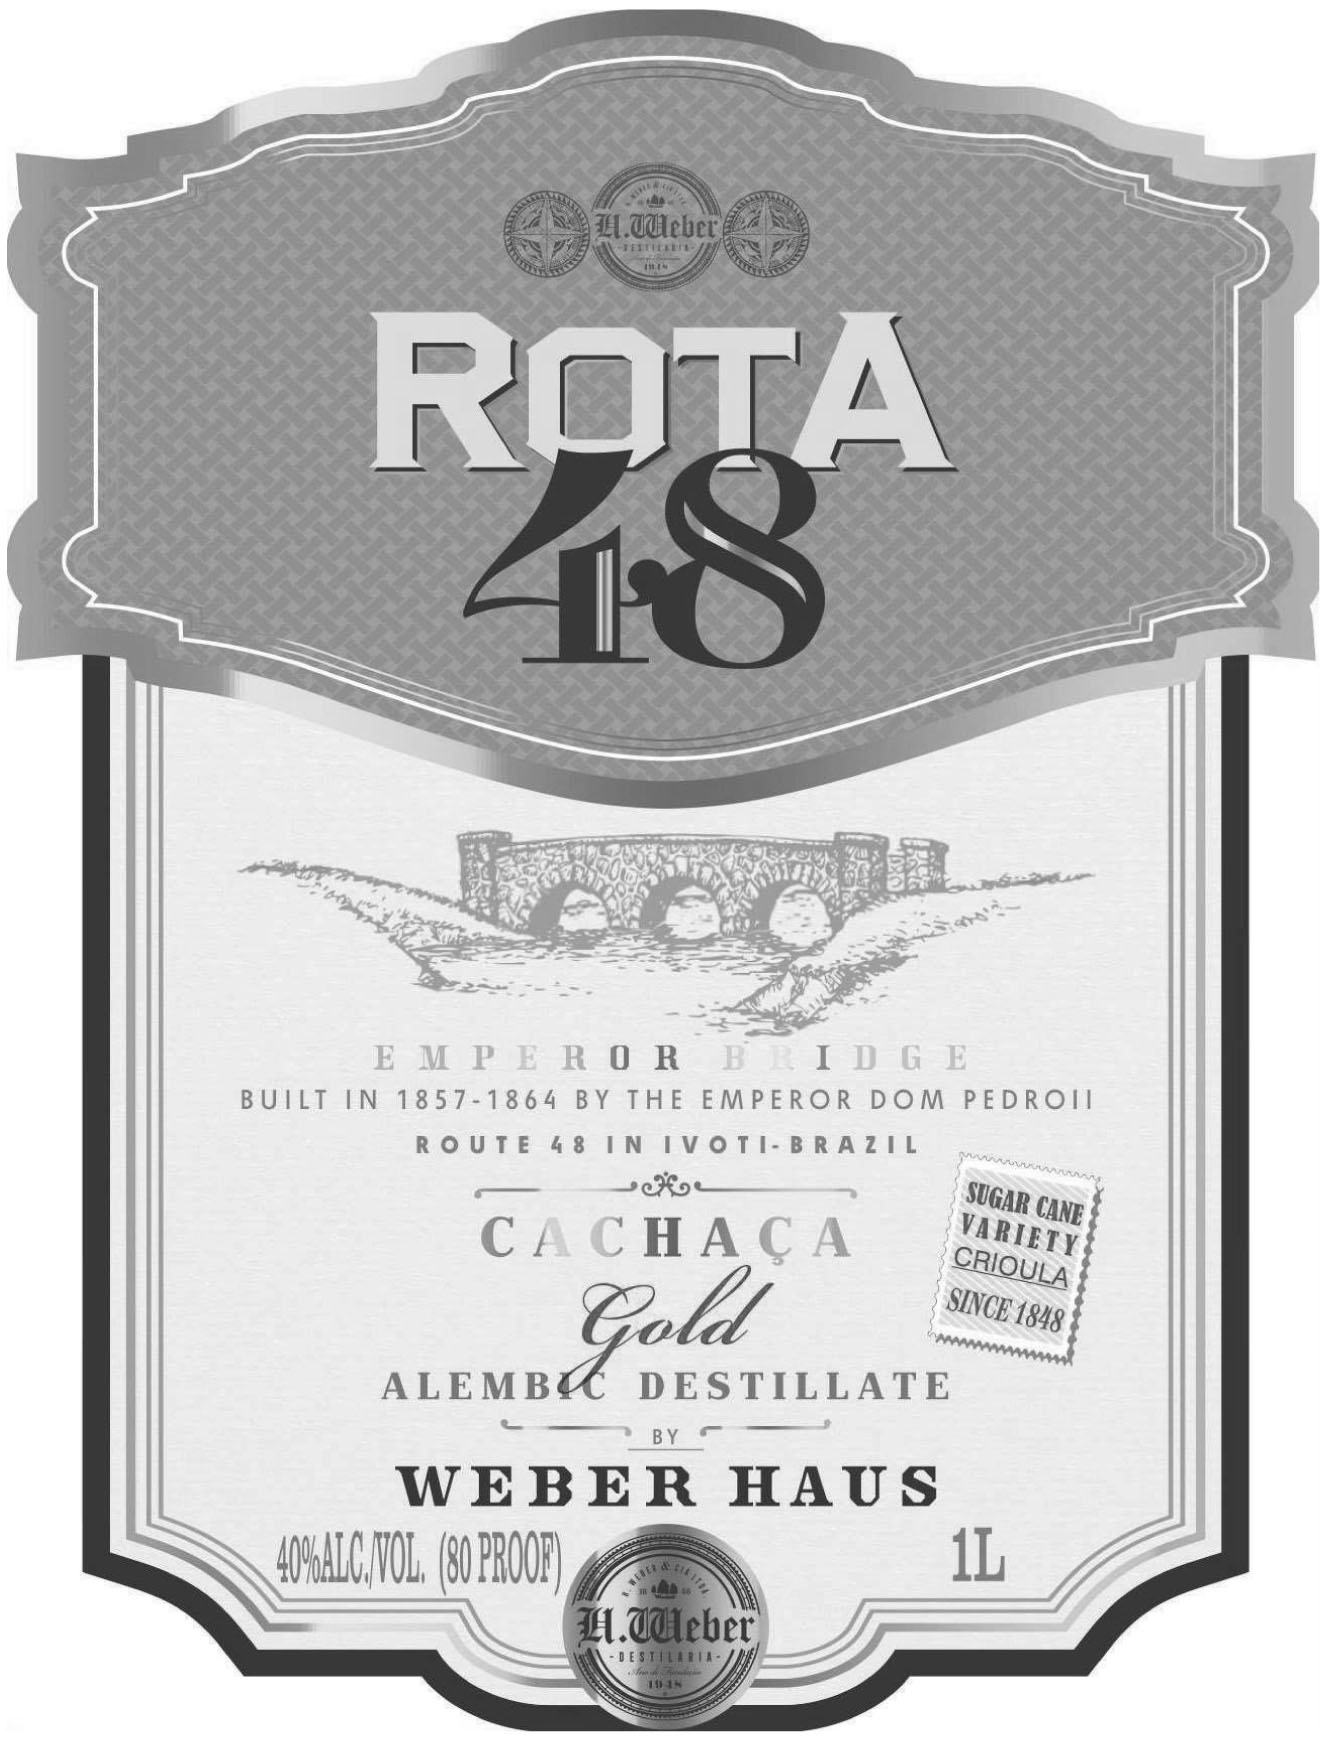 Rota 48 Cachaca Gold label